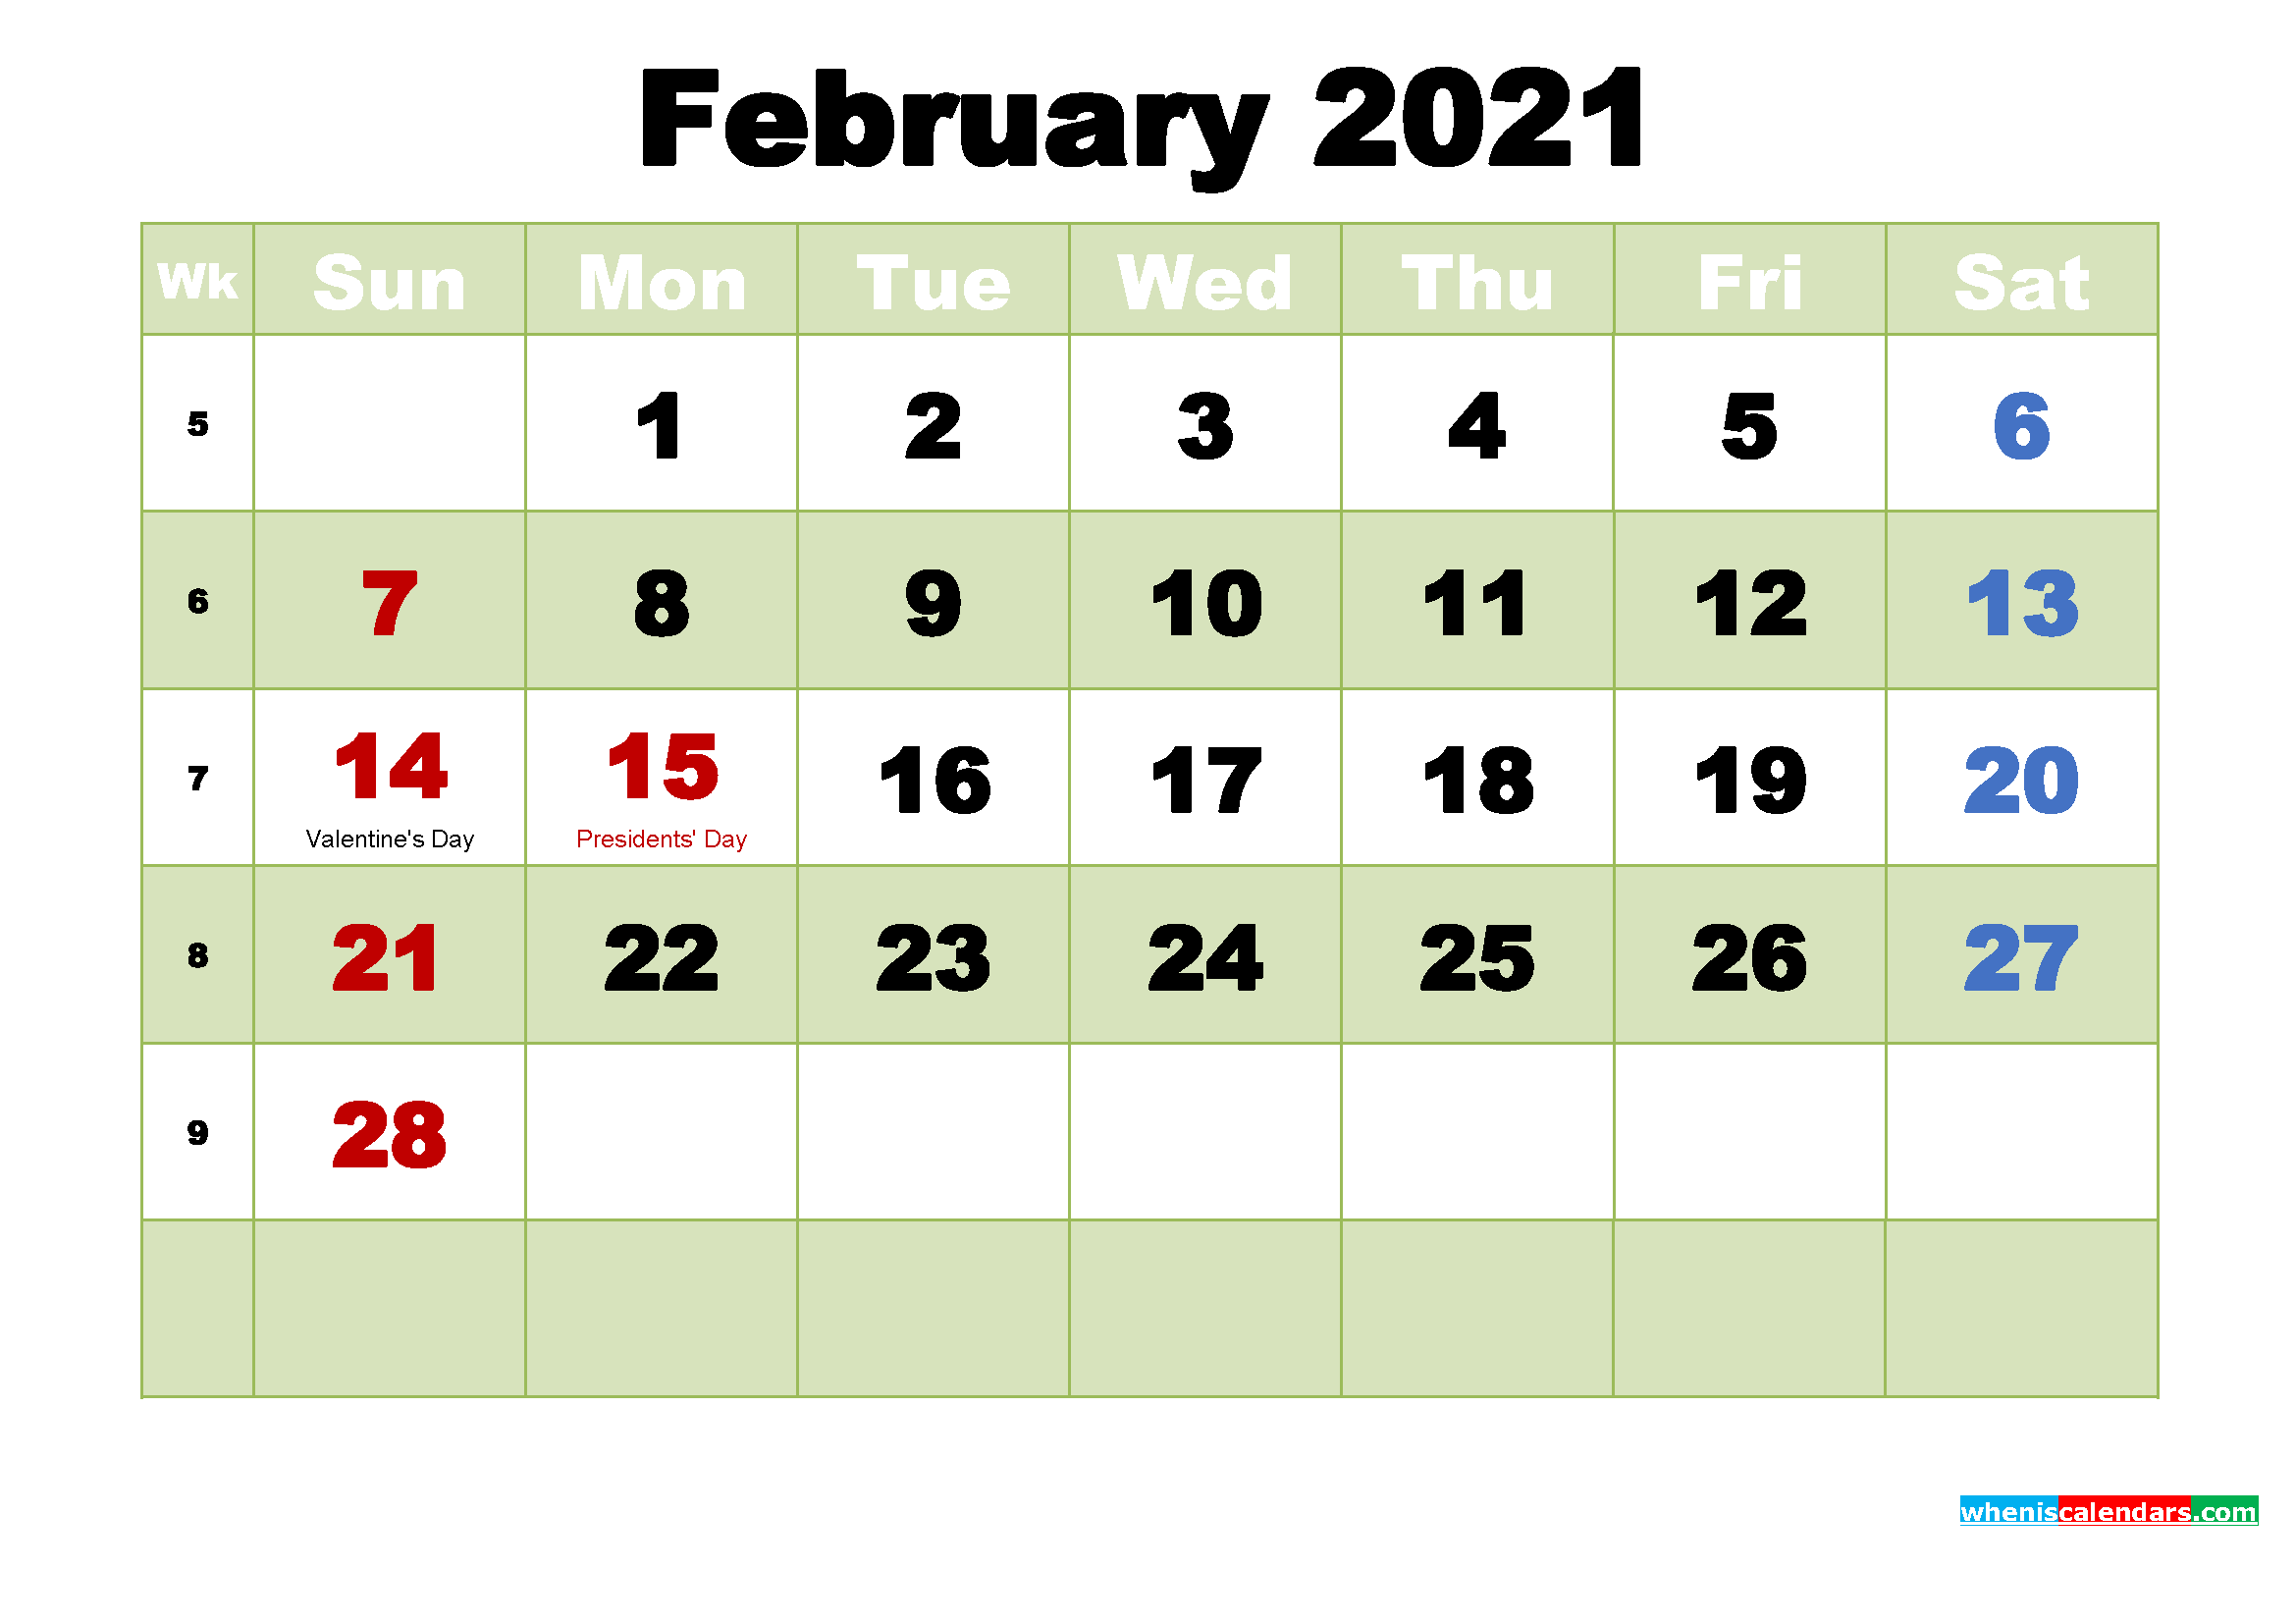 February 2021 Calendar Wallpapers Top Free February 2021 Calendar Backgrounds Wallpaperaccess 3,000+ vectors, stock photos & psd files. february 2021 calendar wallpapers top